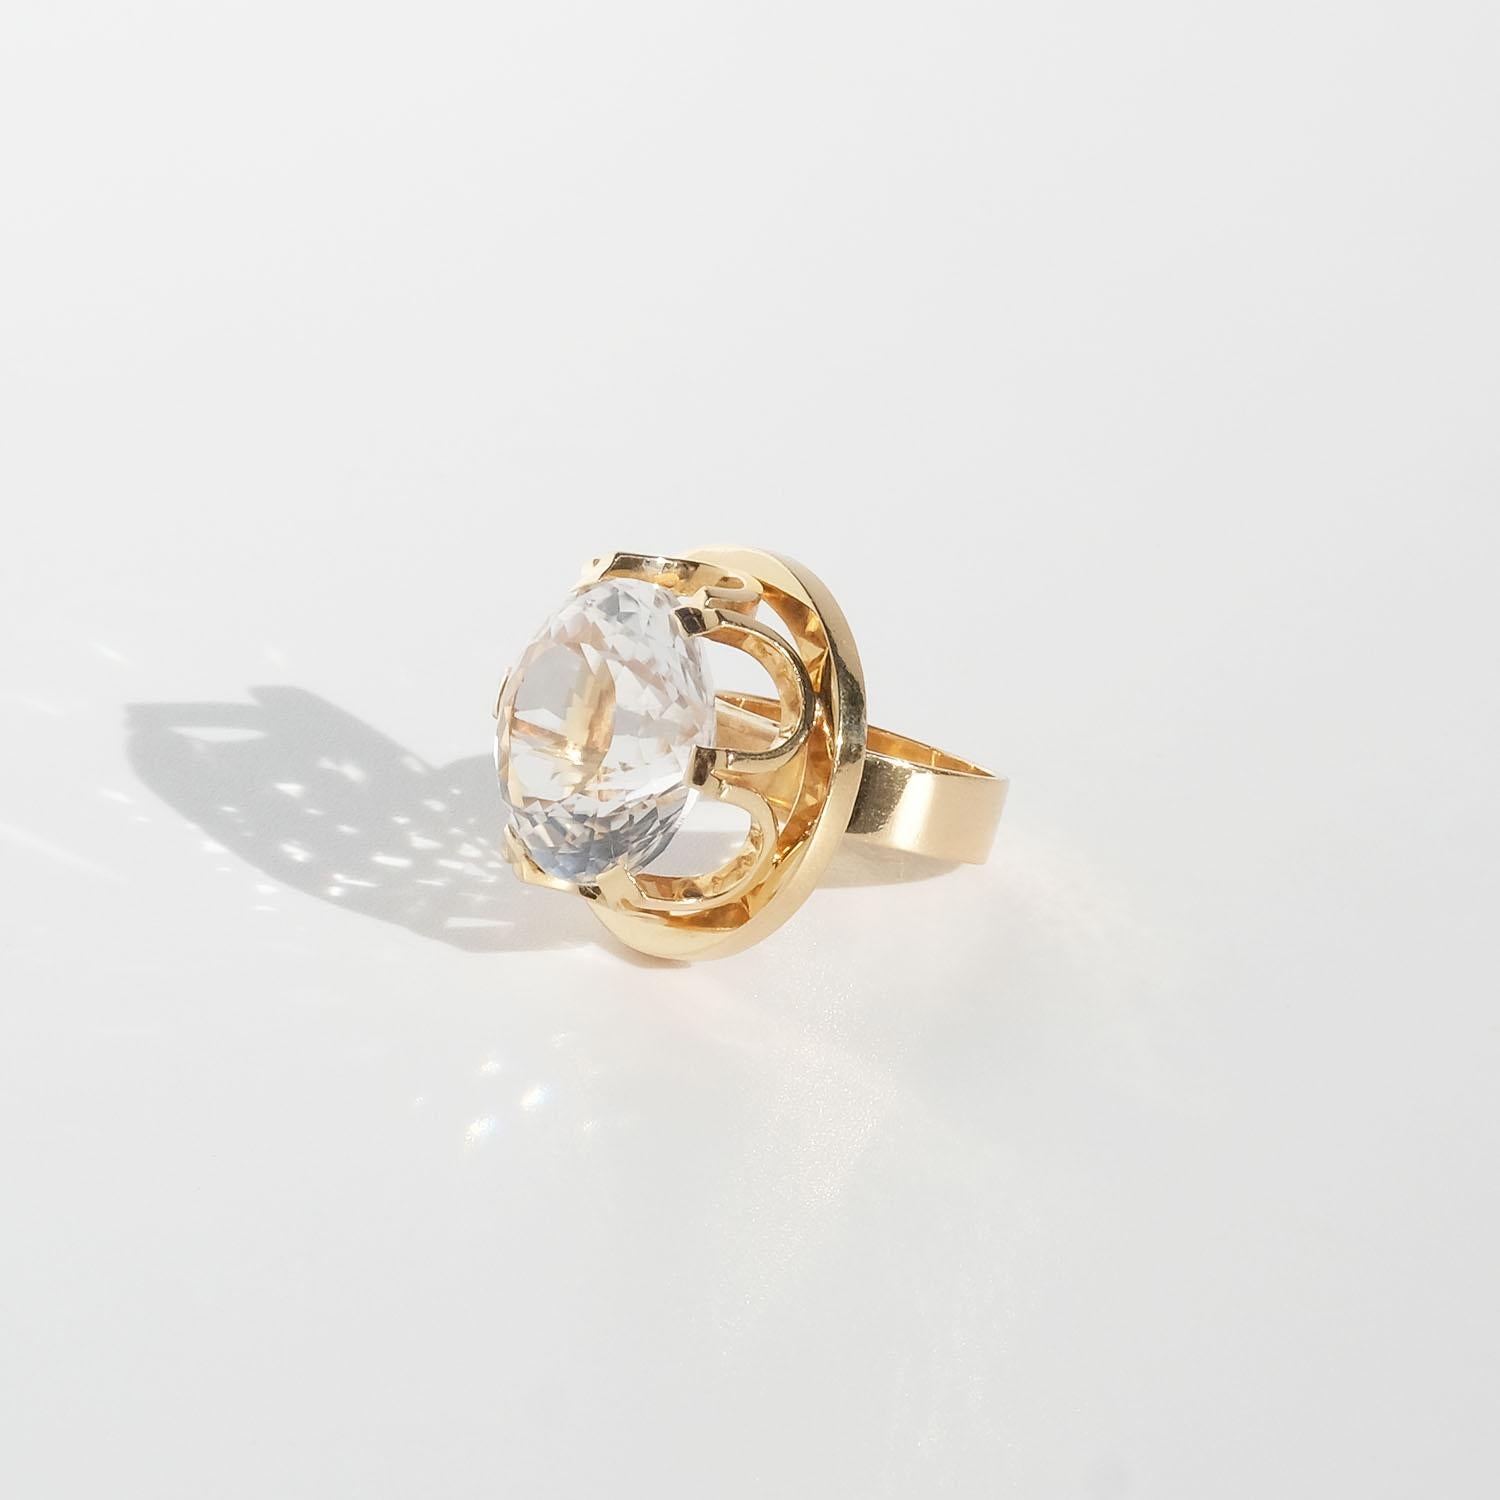 Vintage 18k Gold and Rock Crystal Ring by Finnish Master Kaunis Koru For Sale 2